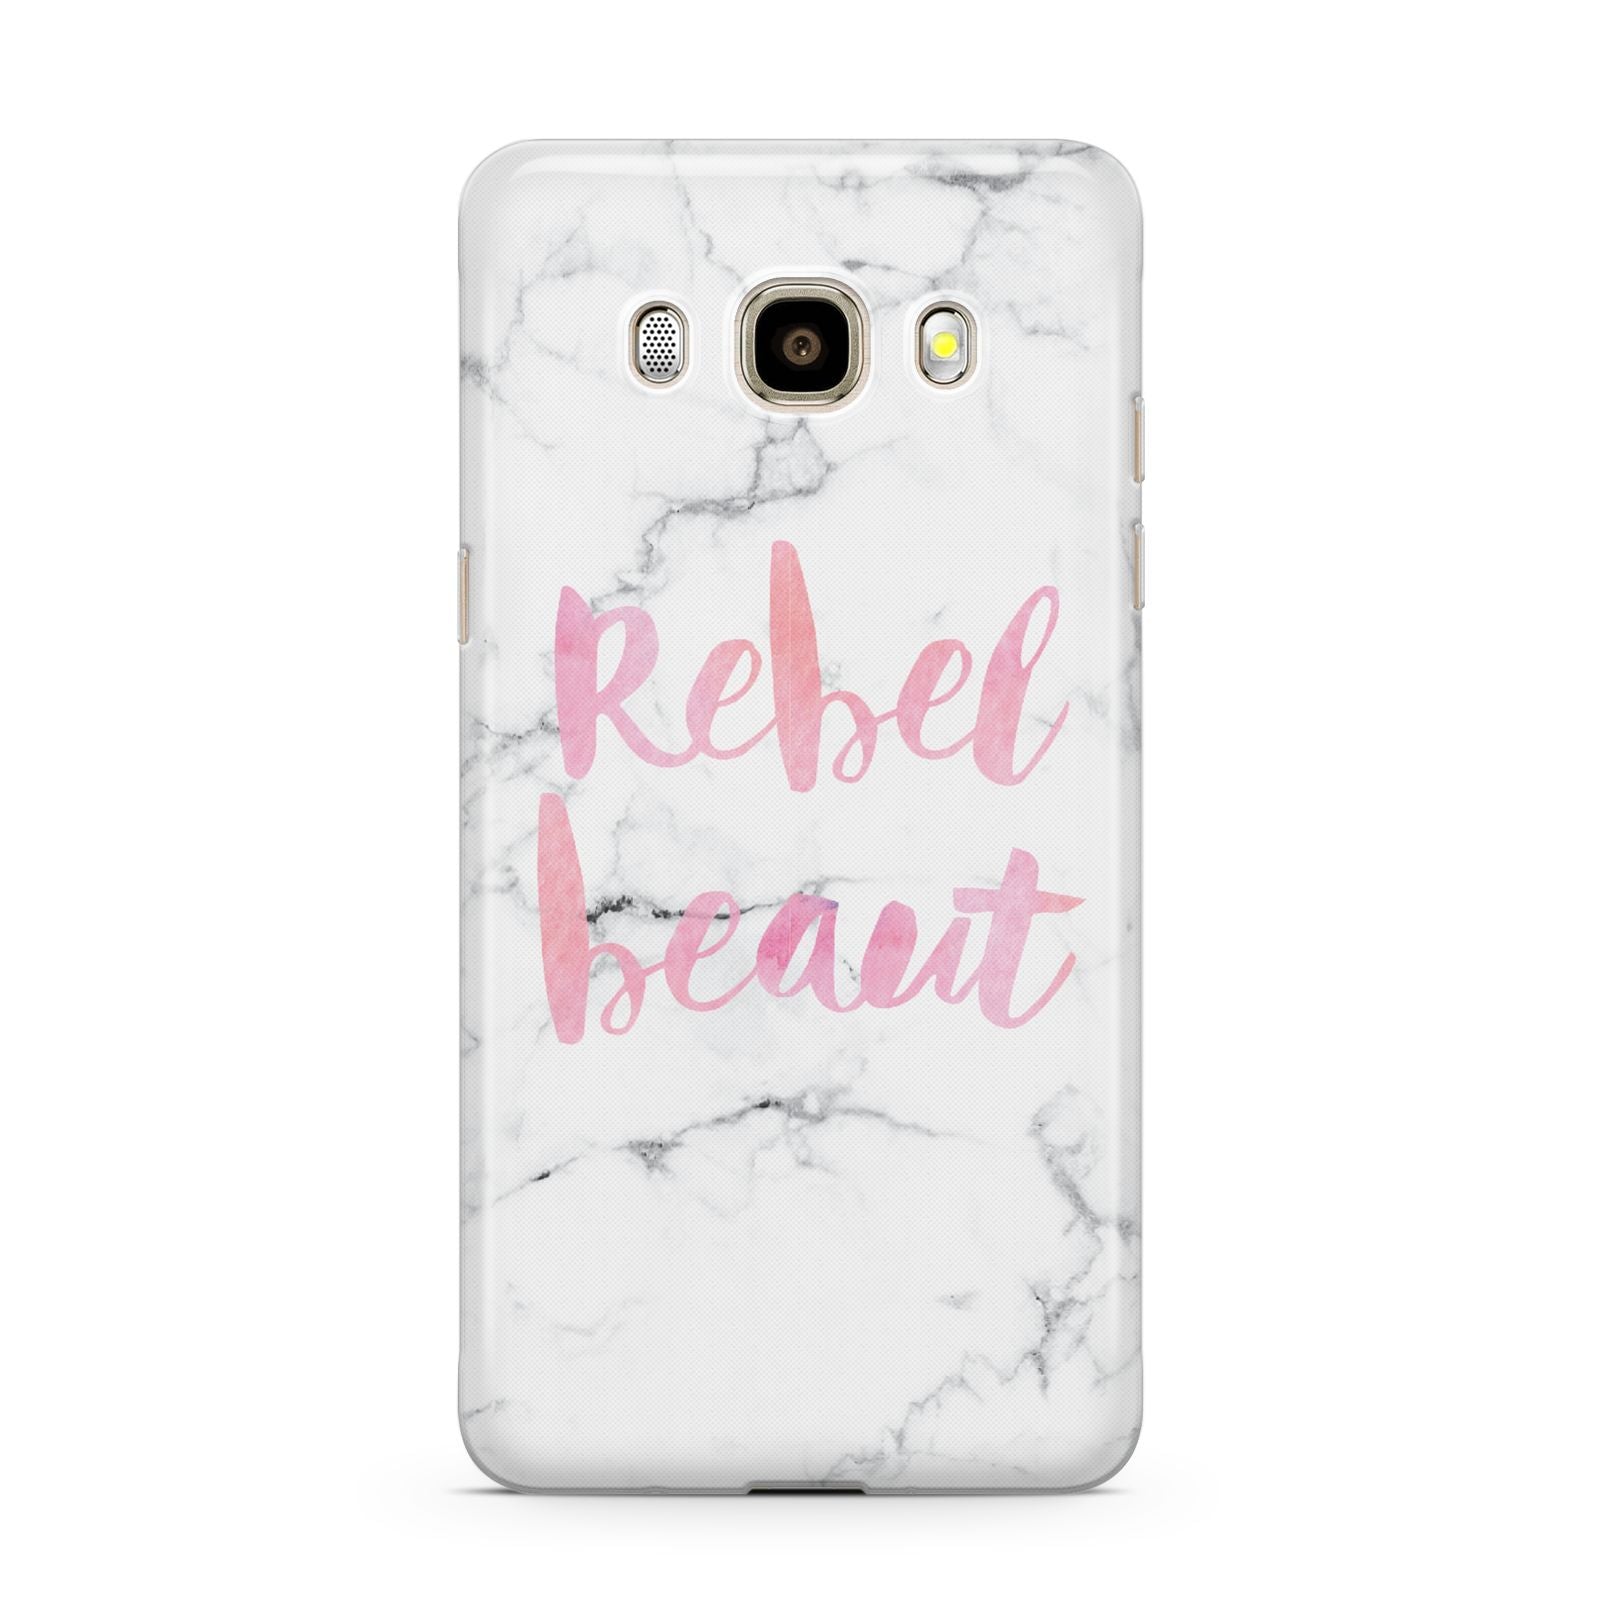 Rebel Heart Grey Marble Effect Samsung Galaxy J7 2016 Case on gold phone